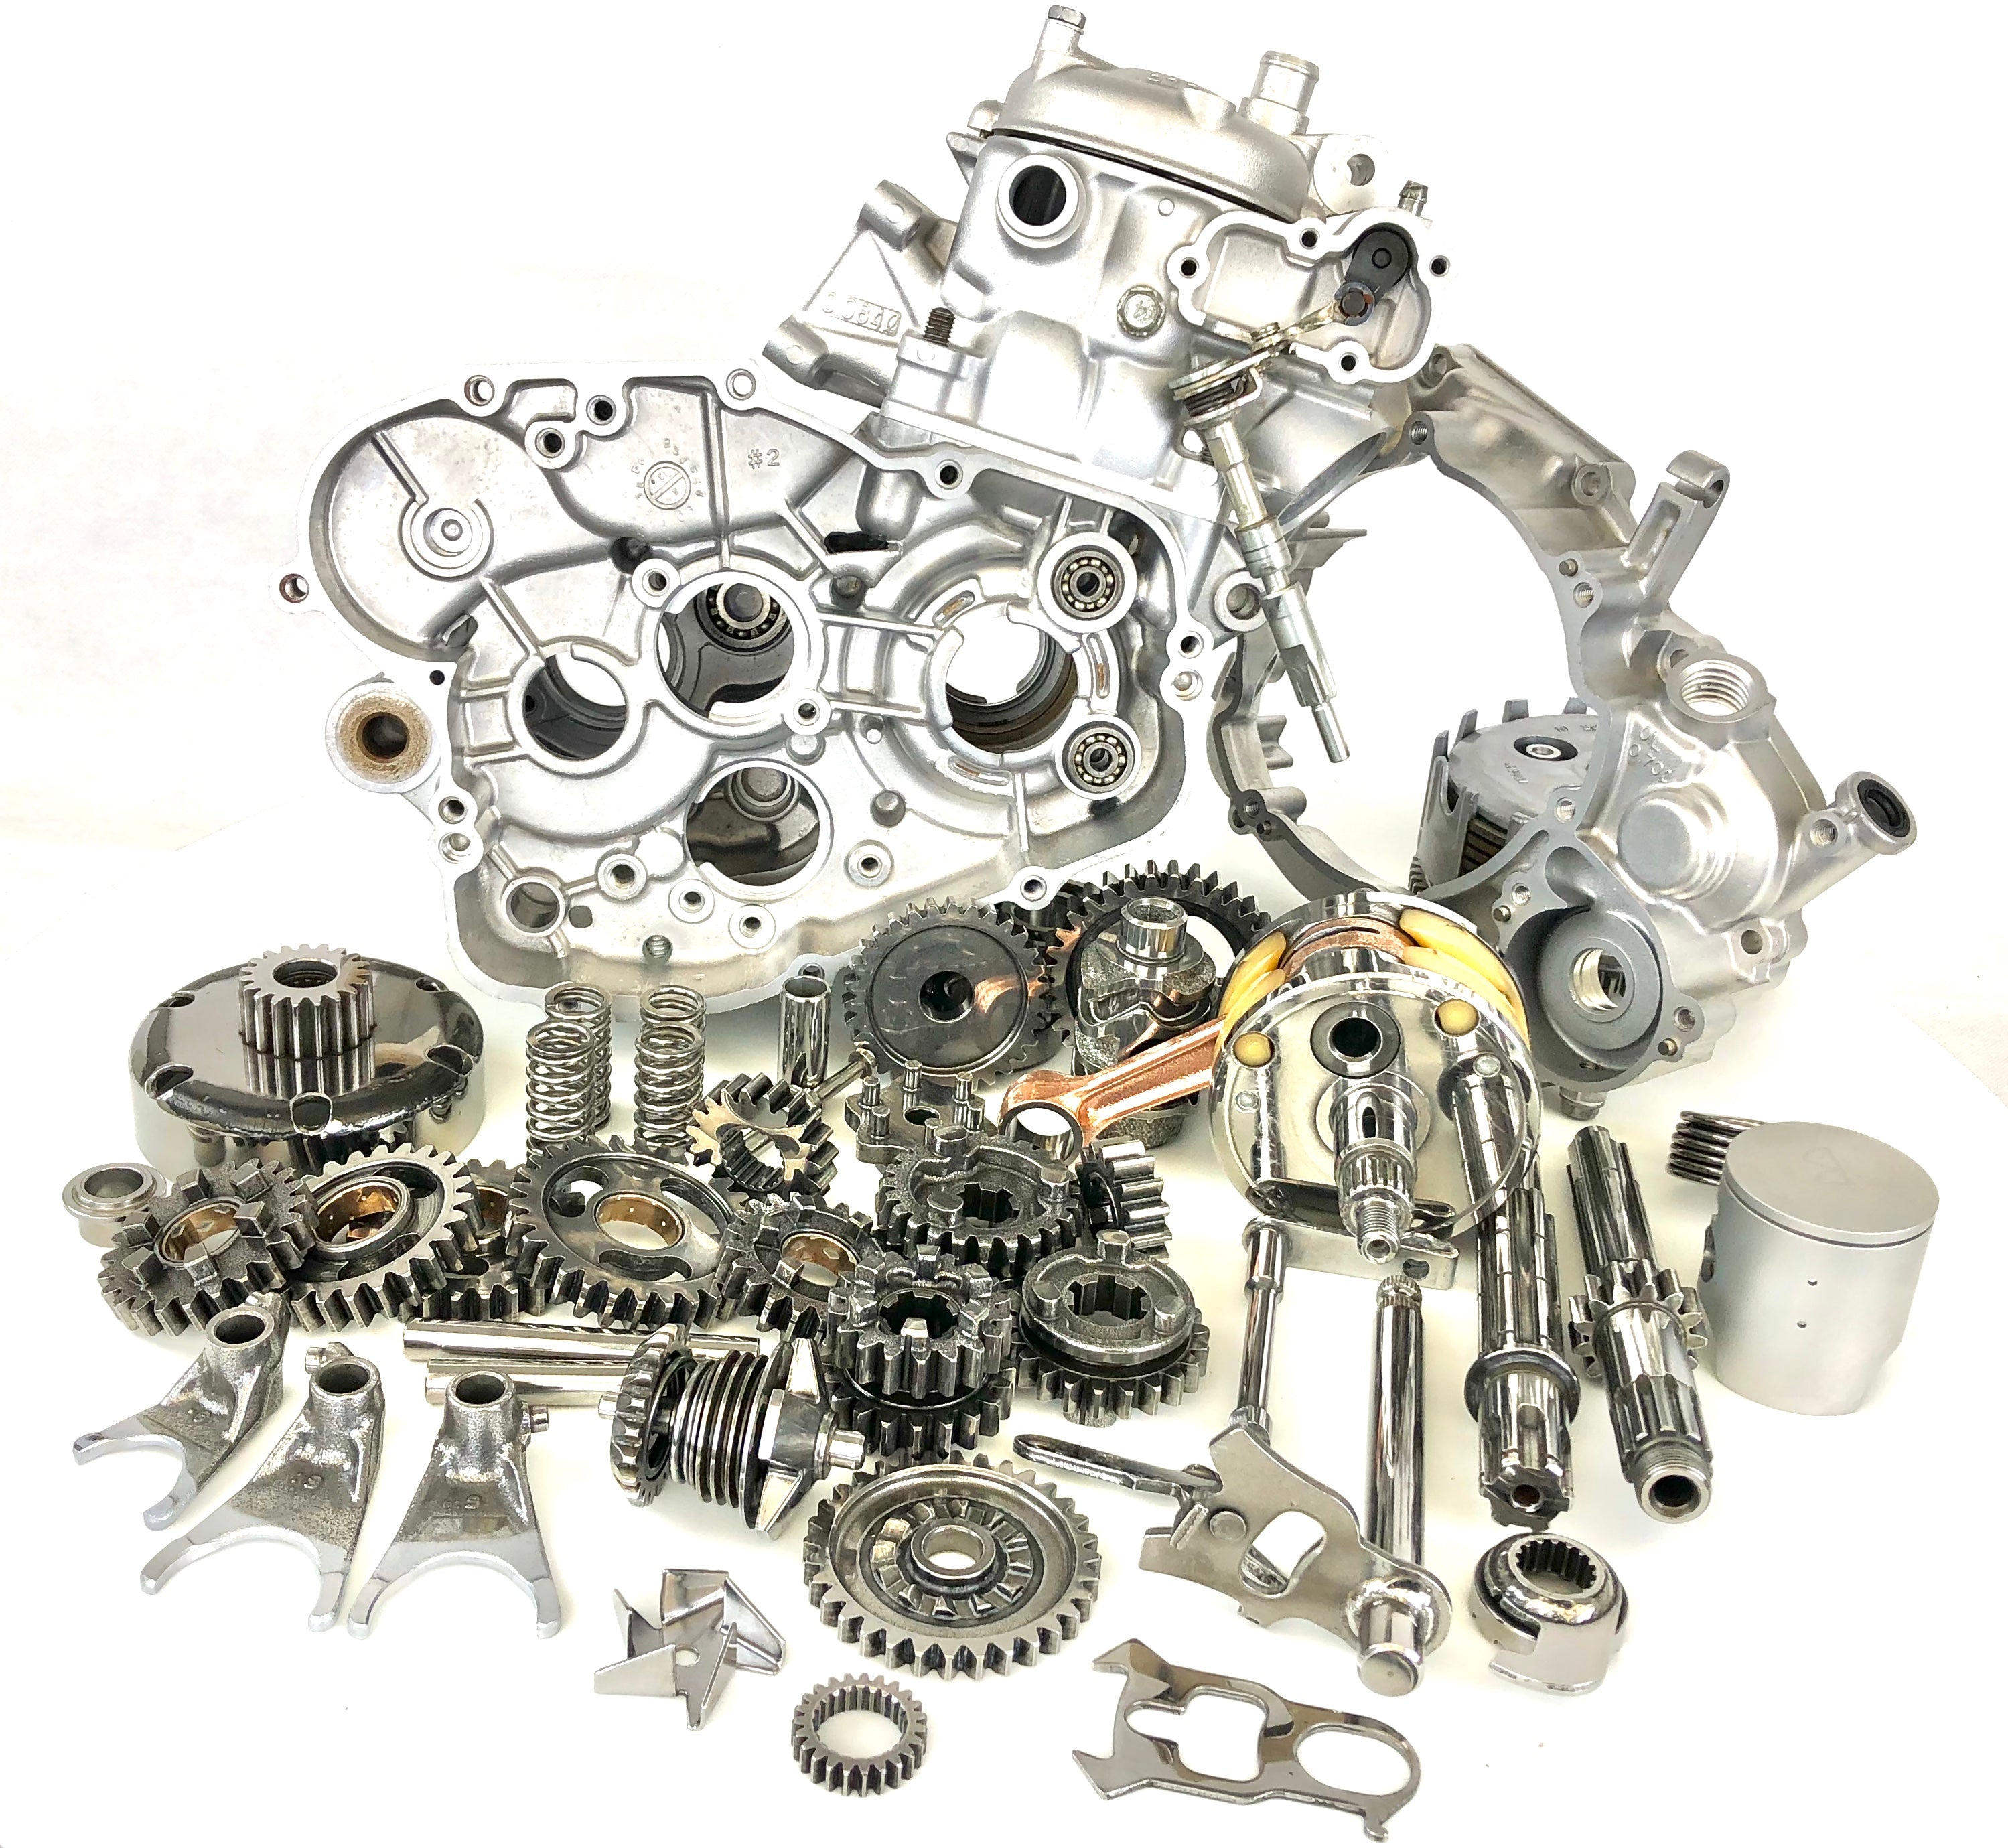 honda motorcycle engine diagram